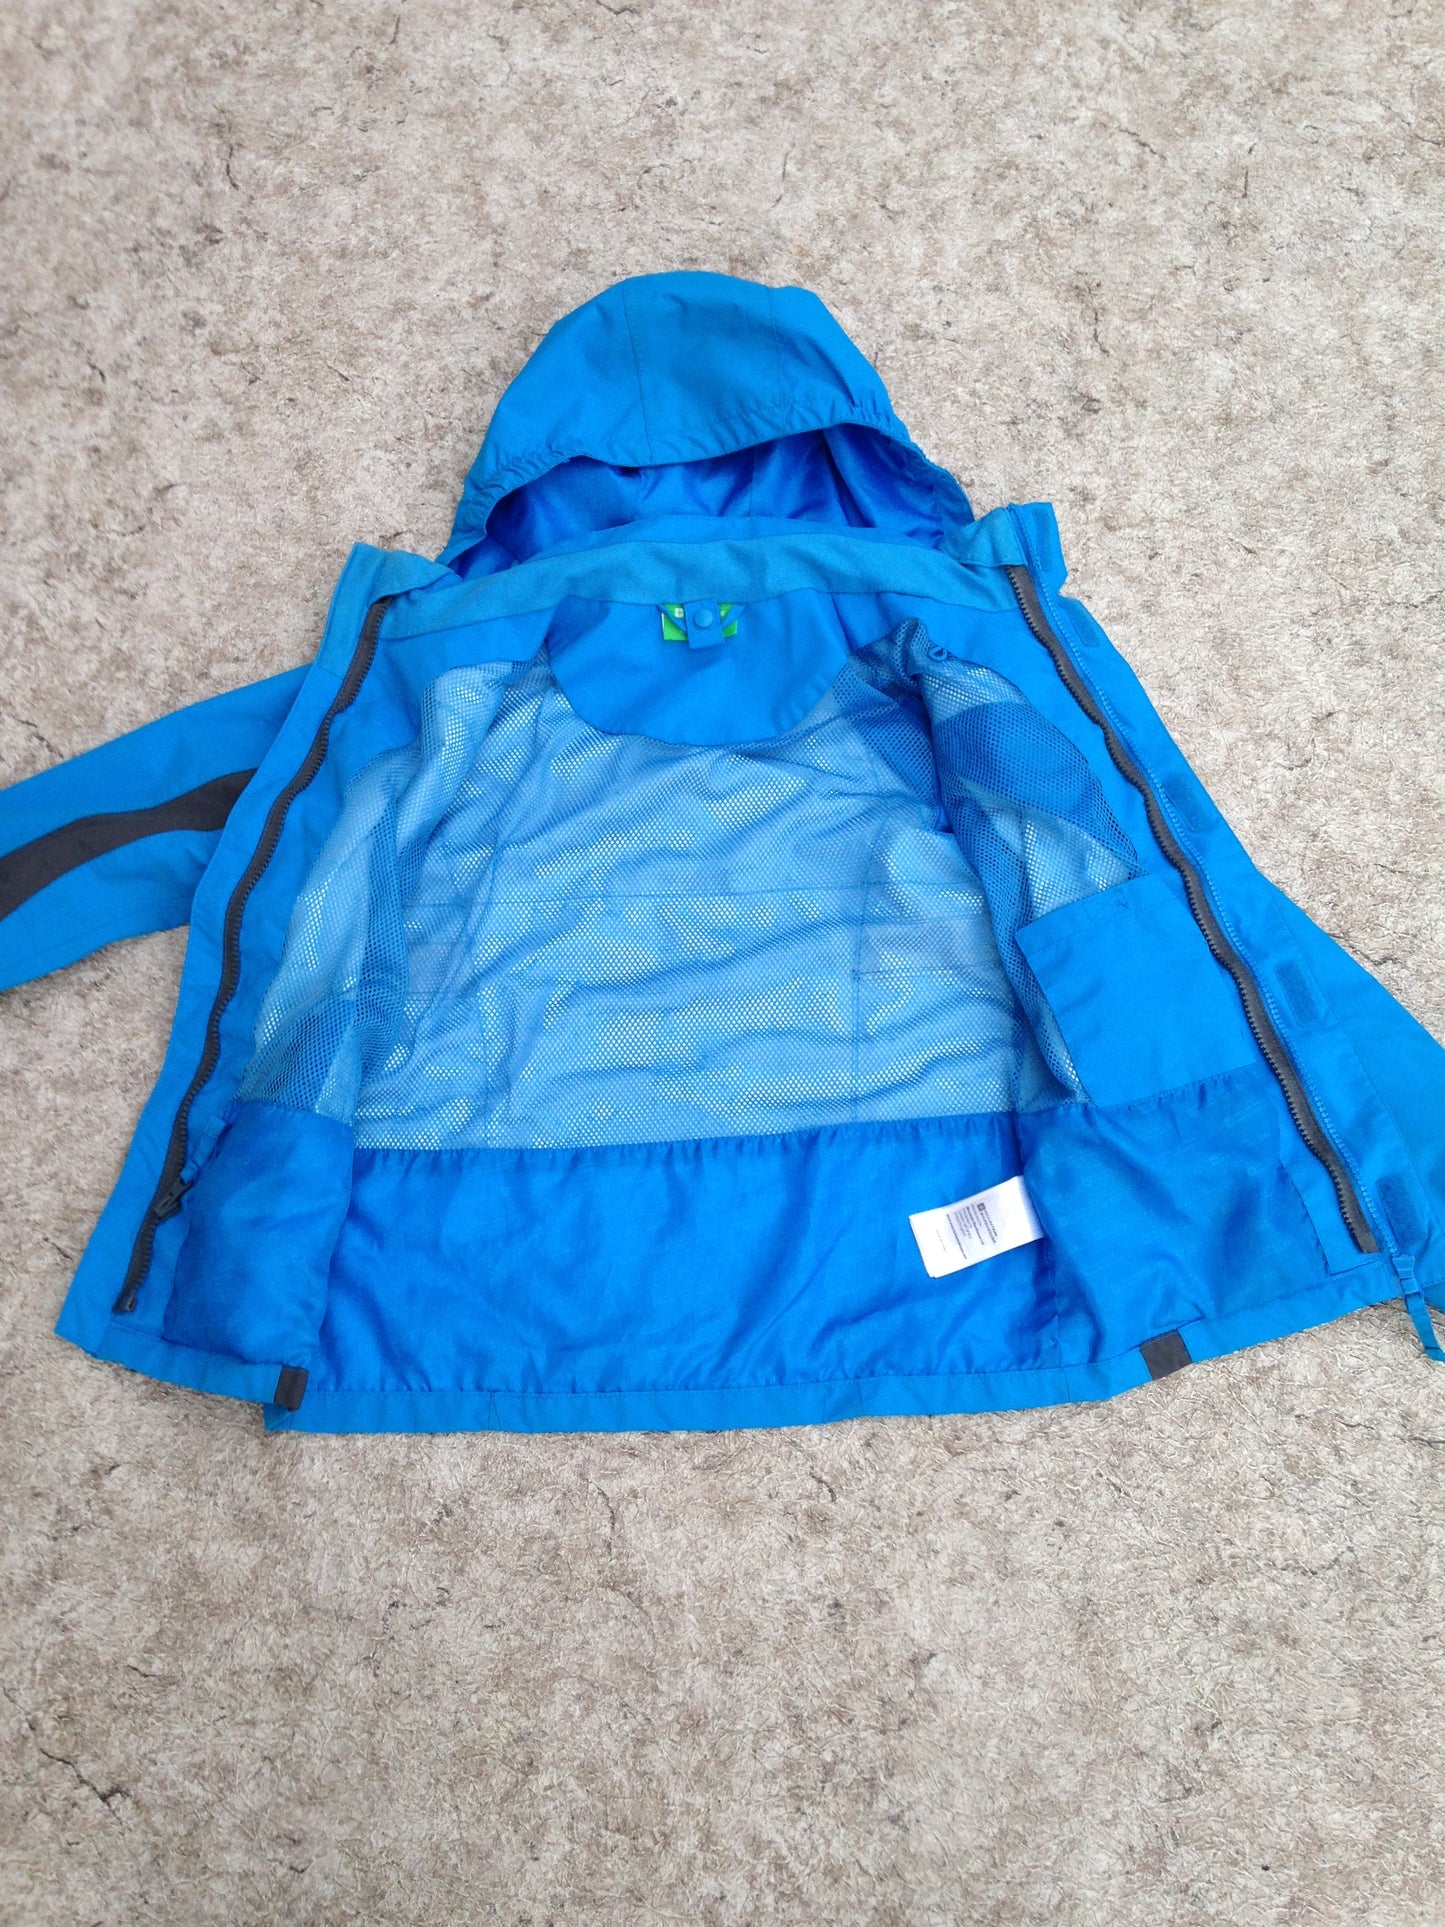 Rain Coat Child Size 9-10 Mtn Warehouse Blue Dk Grey Rain Coat Only No Fleece Liner